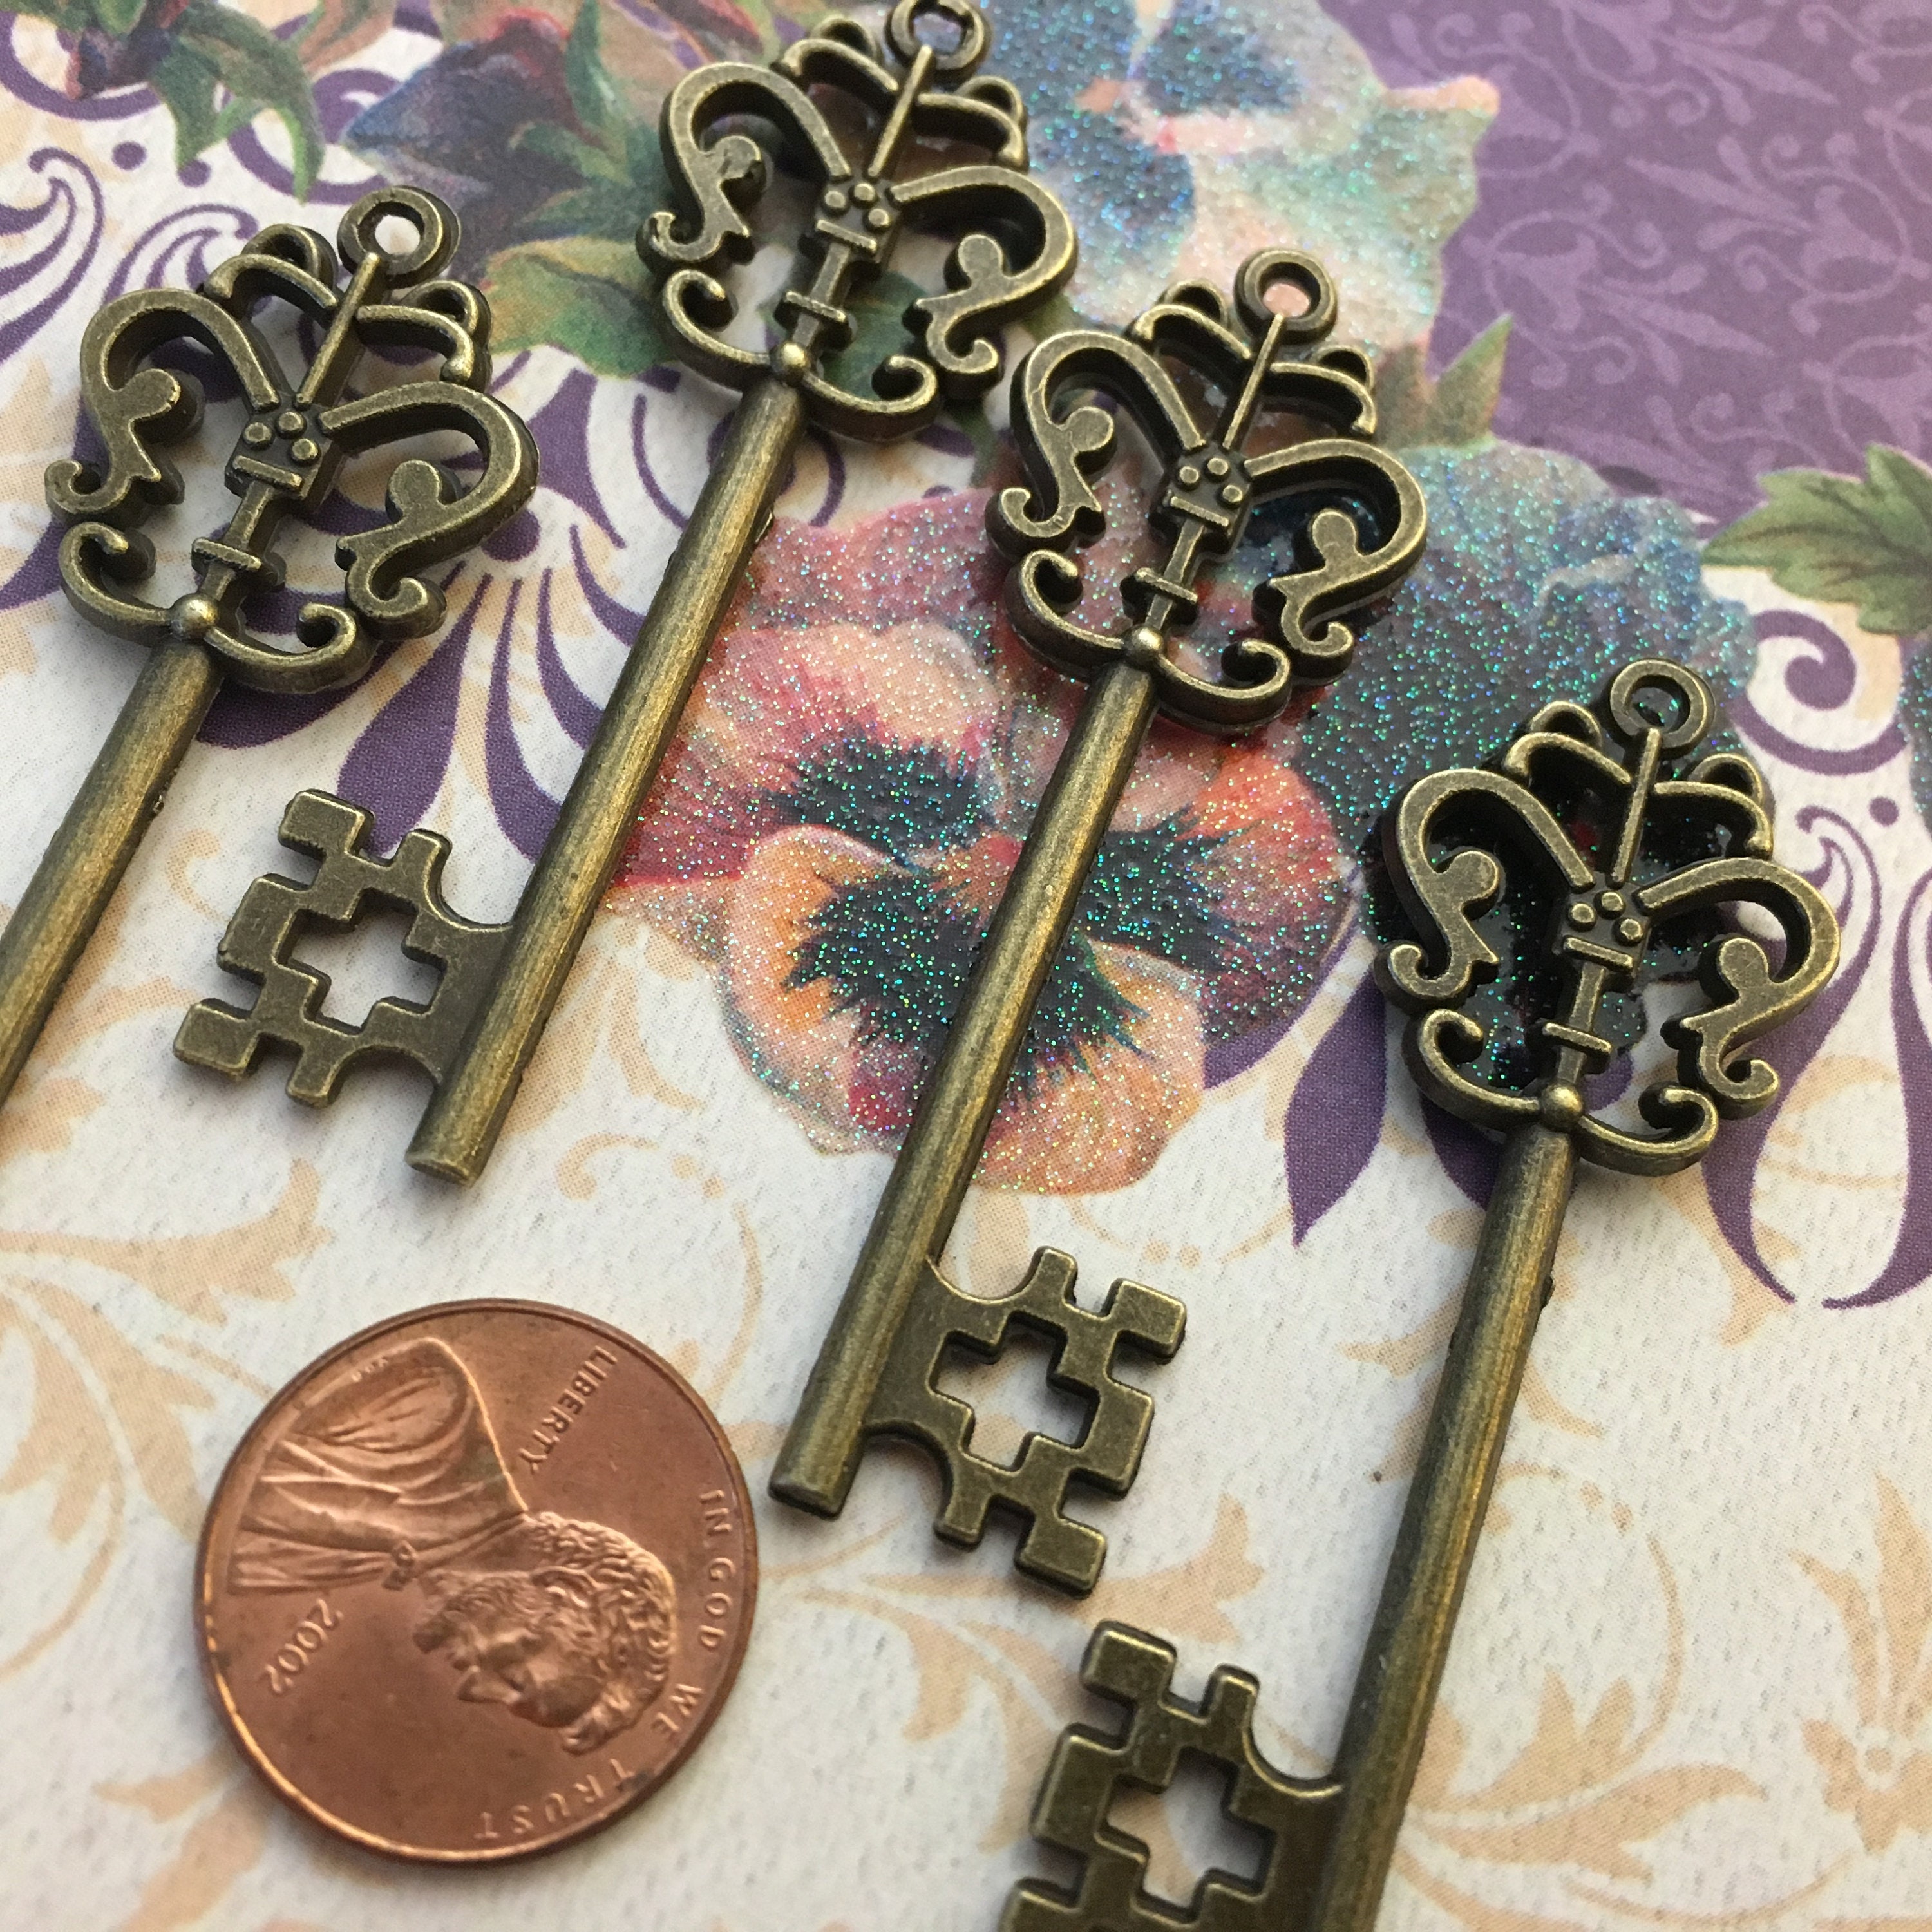 Replica Heart Bracelet Small Key Charm Skeleton Steampunk Gate Keys Vintage Jewelry Wedding Escort Cards Beads Supplies Pendant Antique Ring